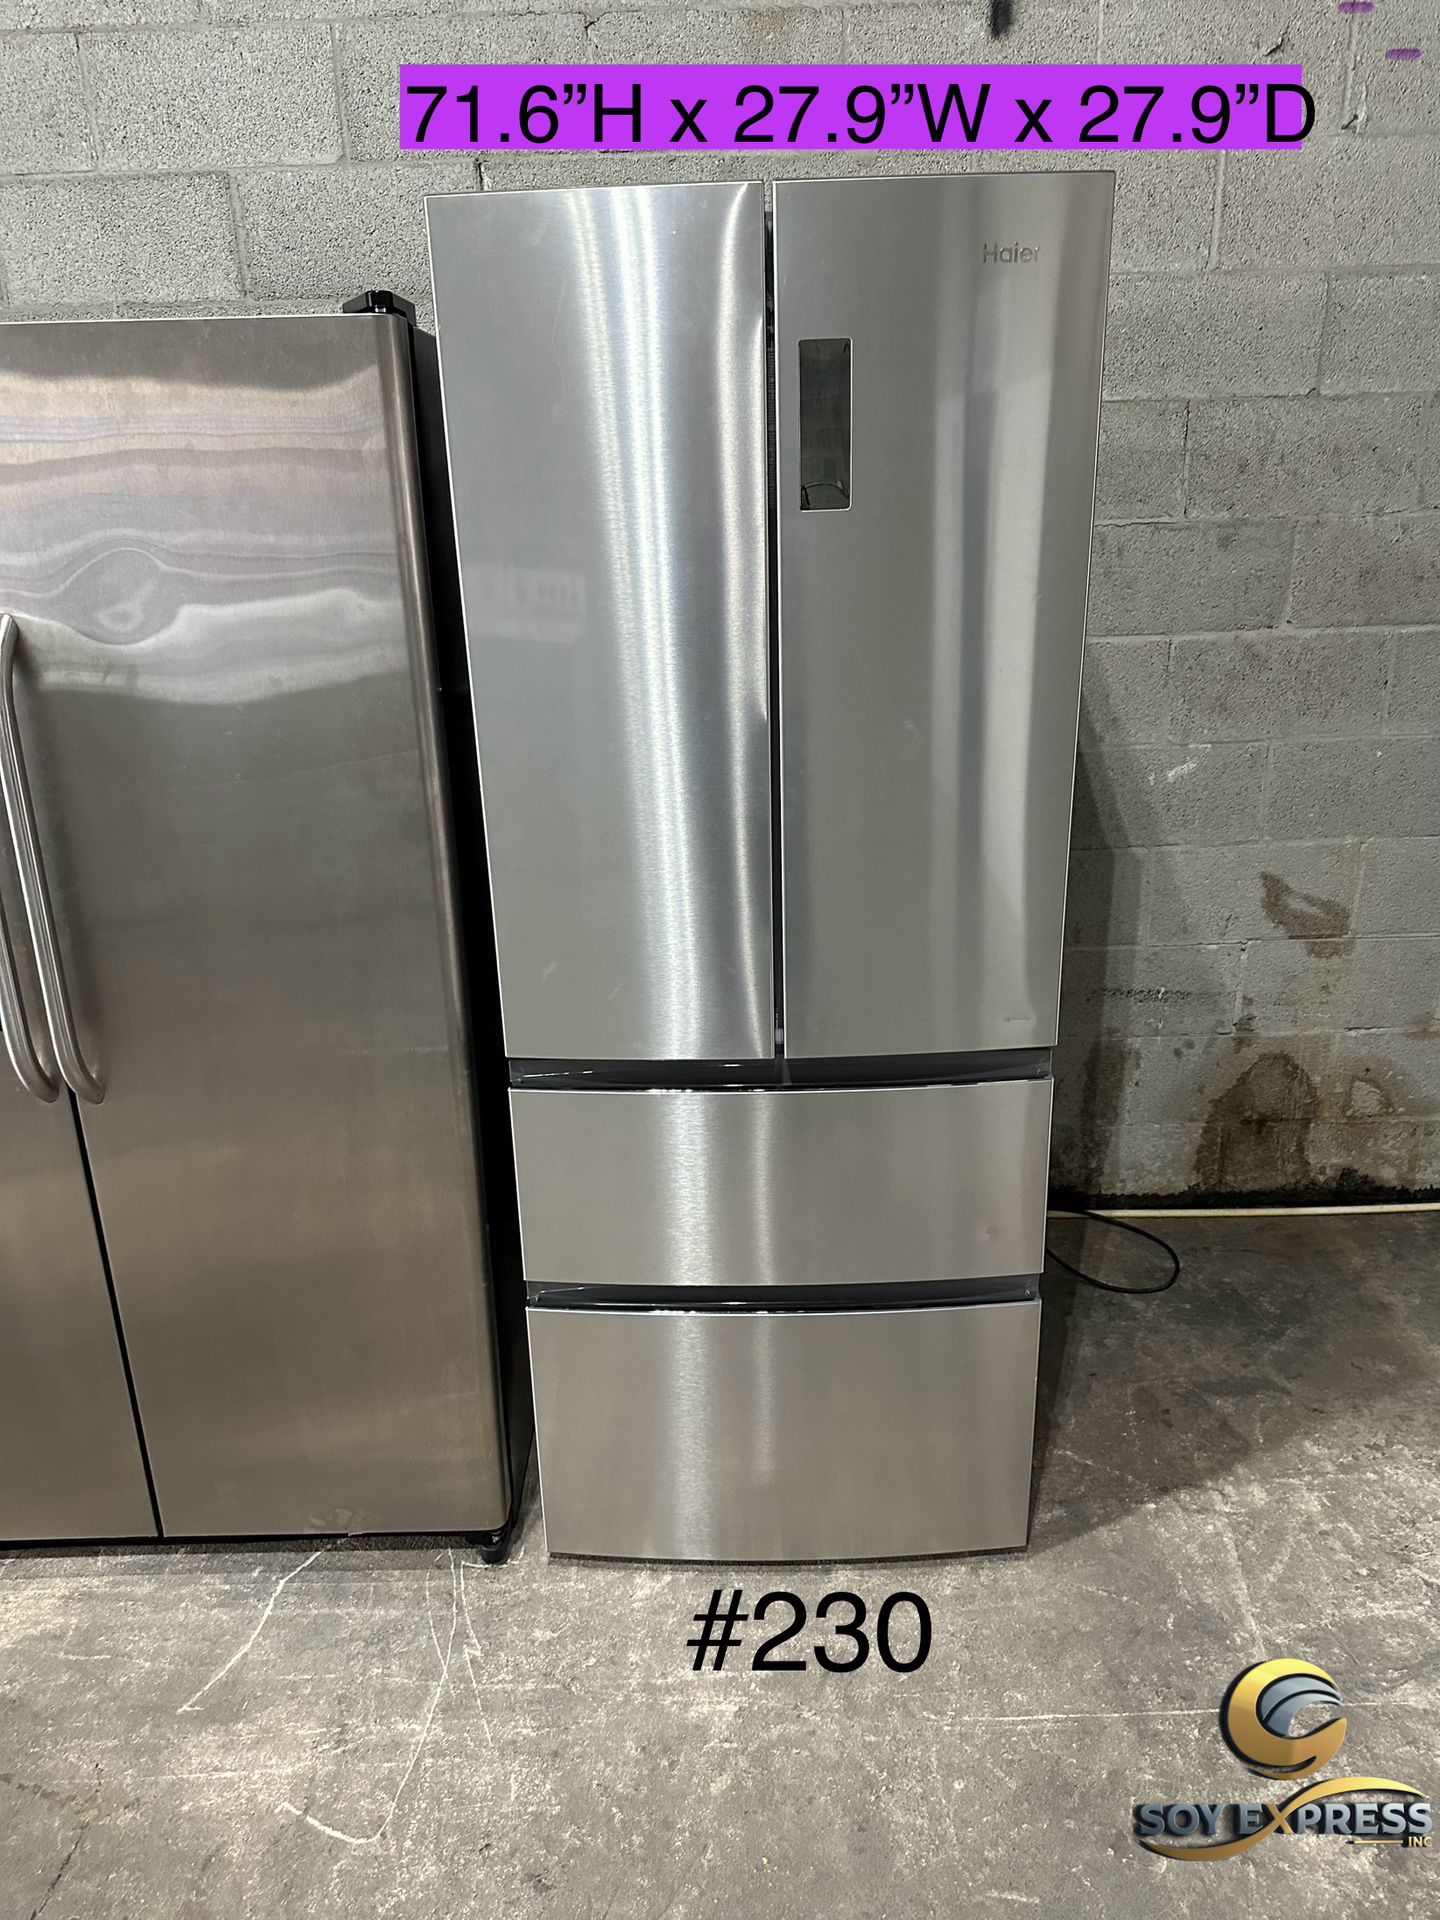 Haier Refrigerator French Door (#230)